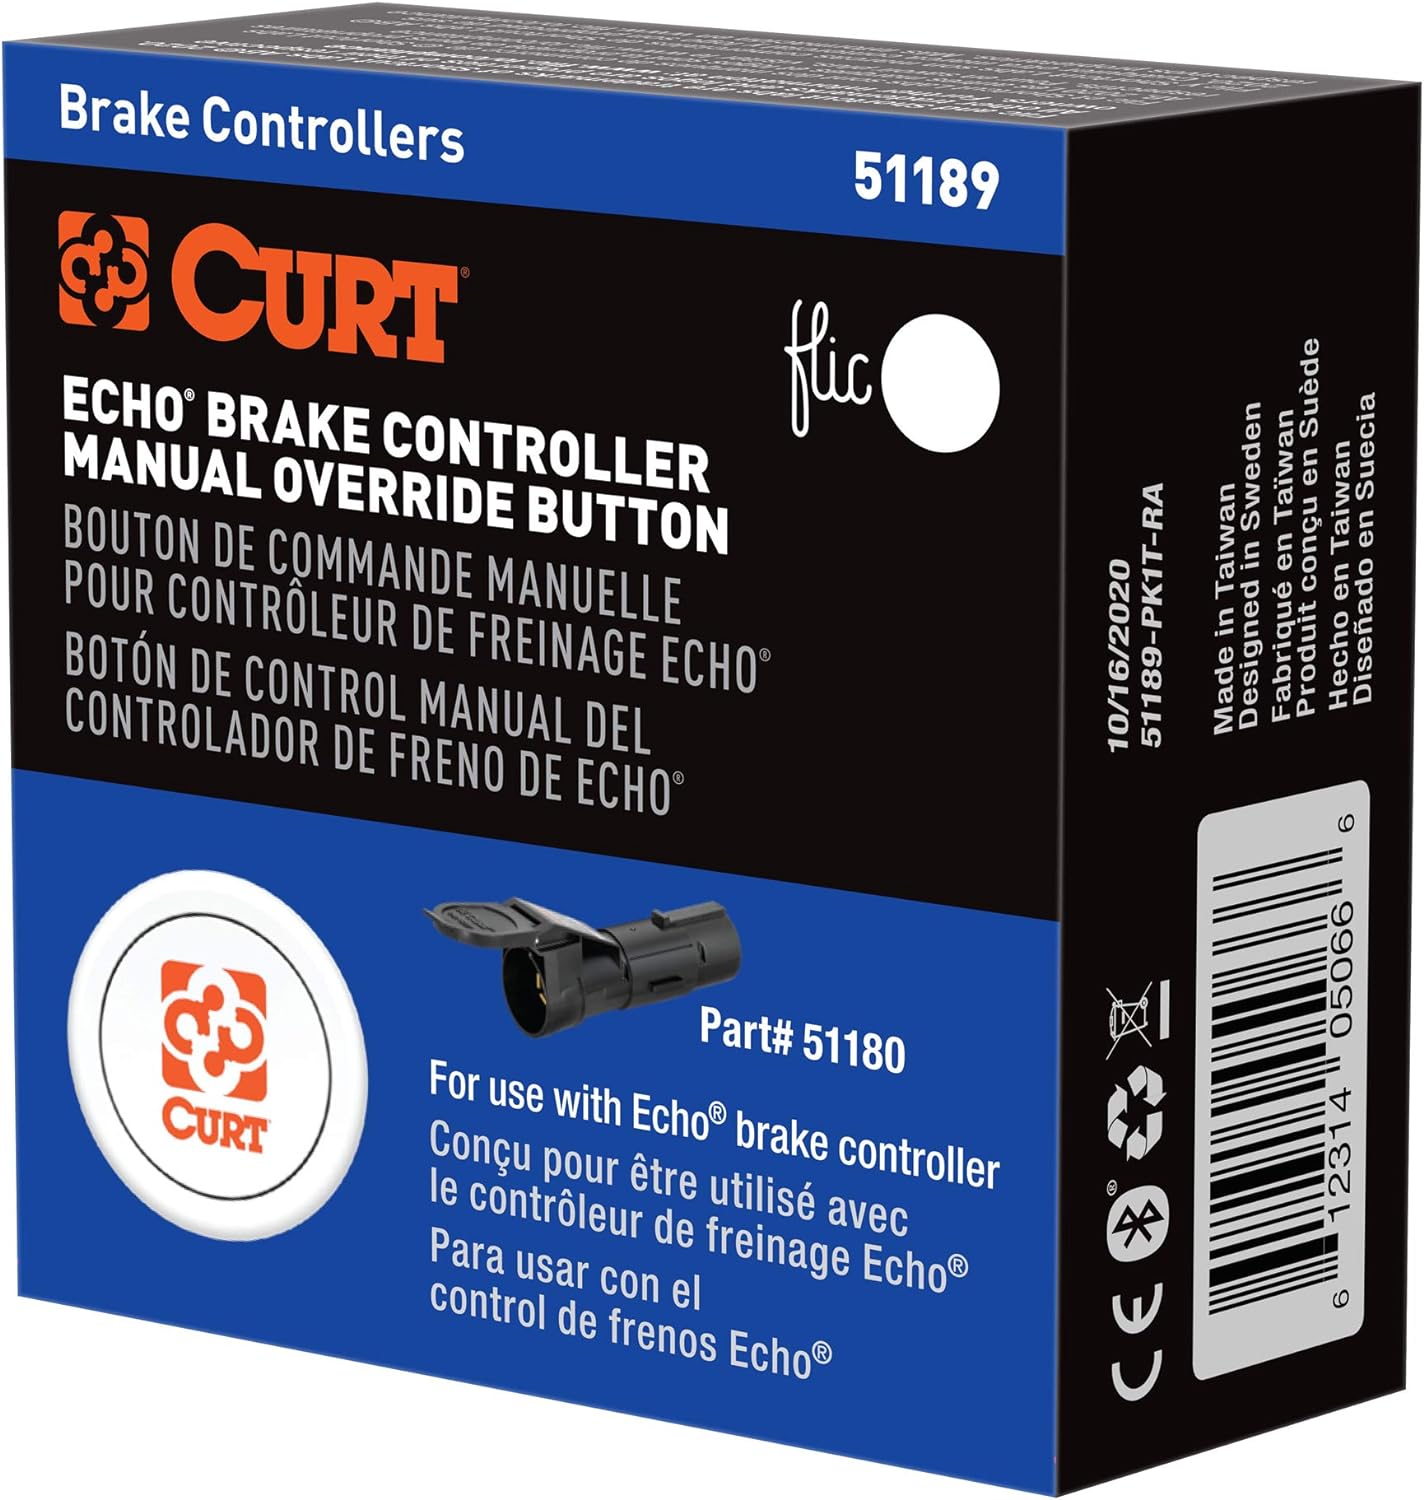 Curt Echo Brake Controller Manual Override Button